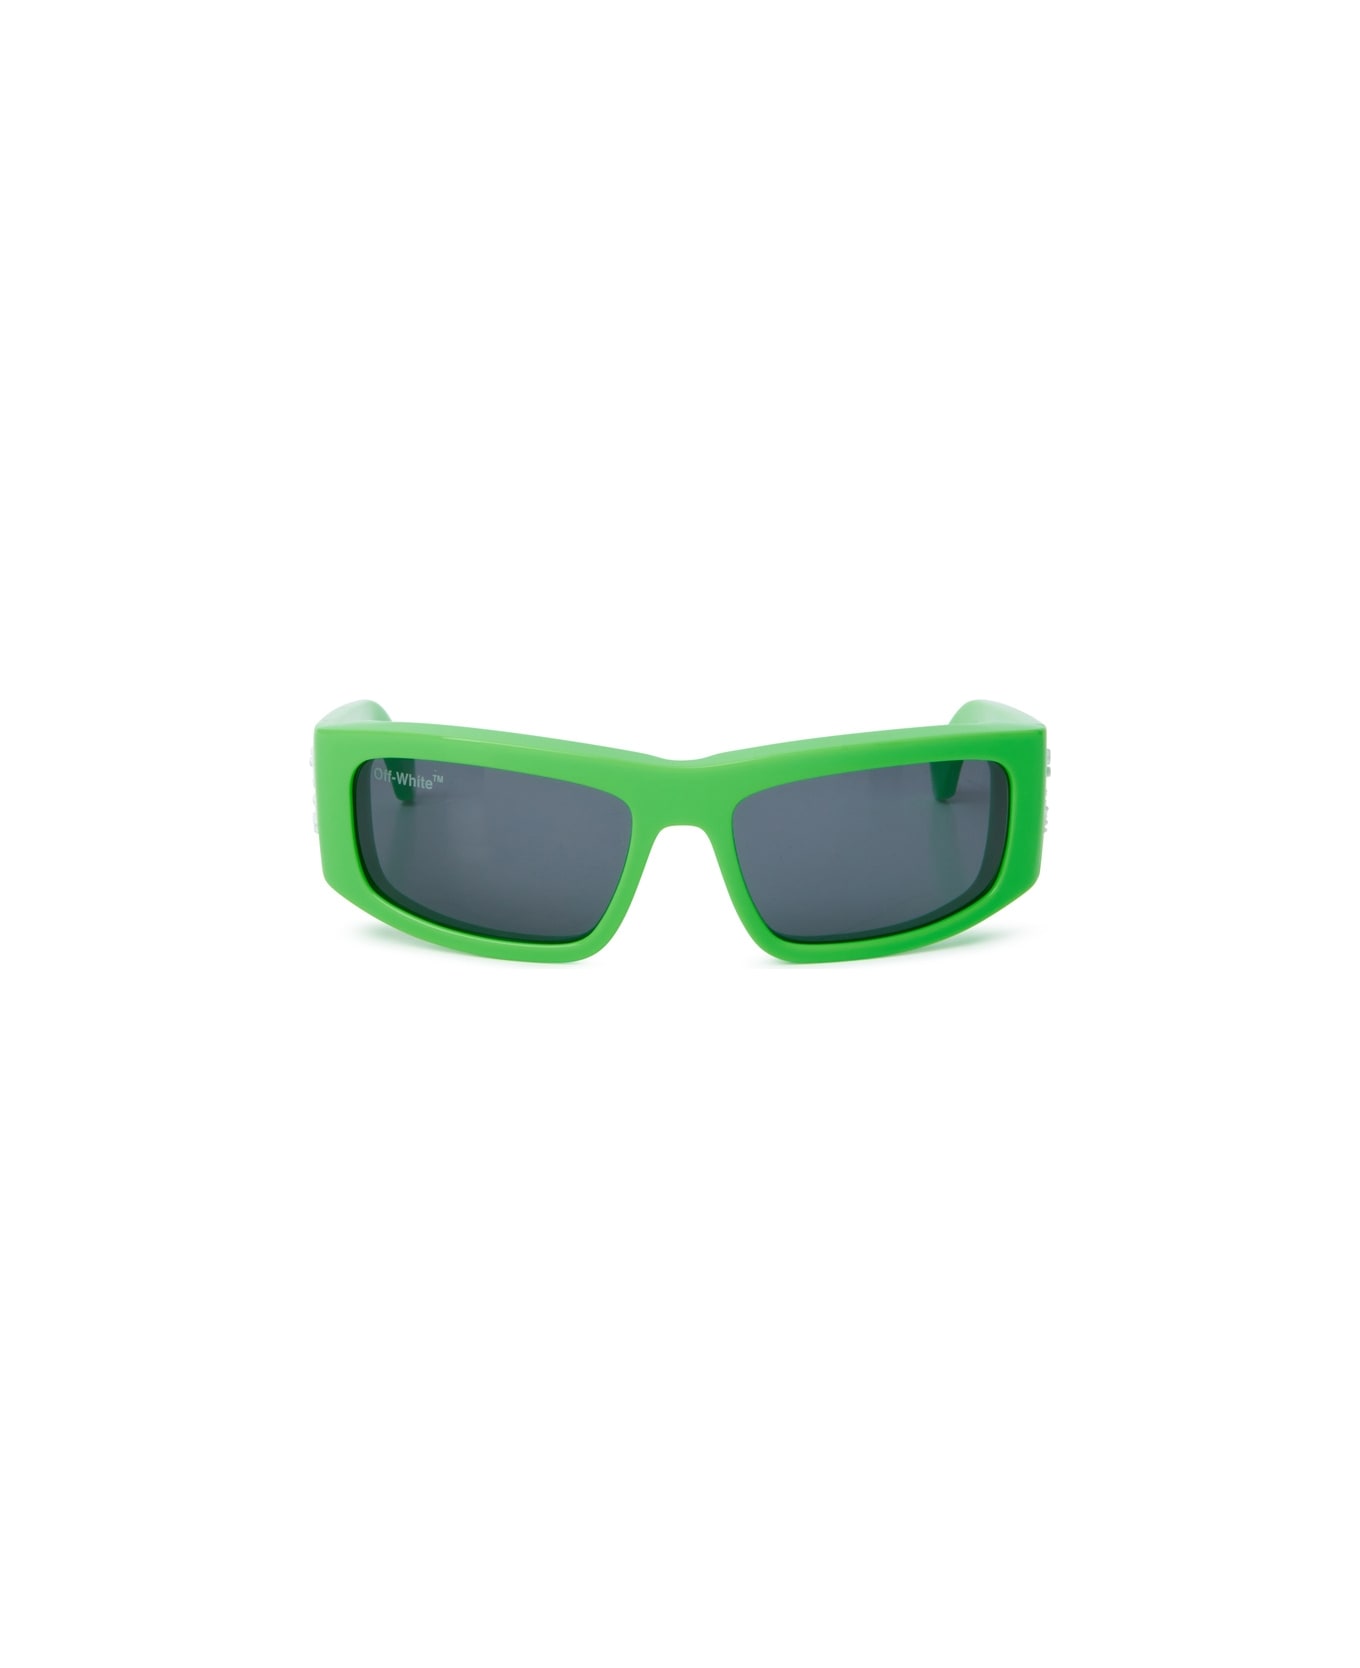 Off-White JOSEPH SUNGLASSES Sunglasses - Green